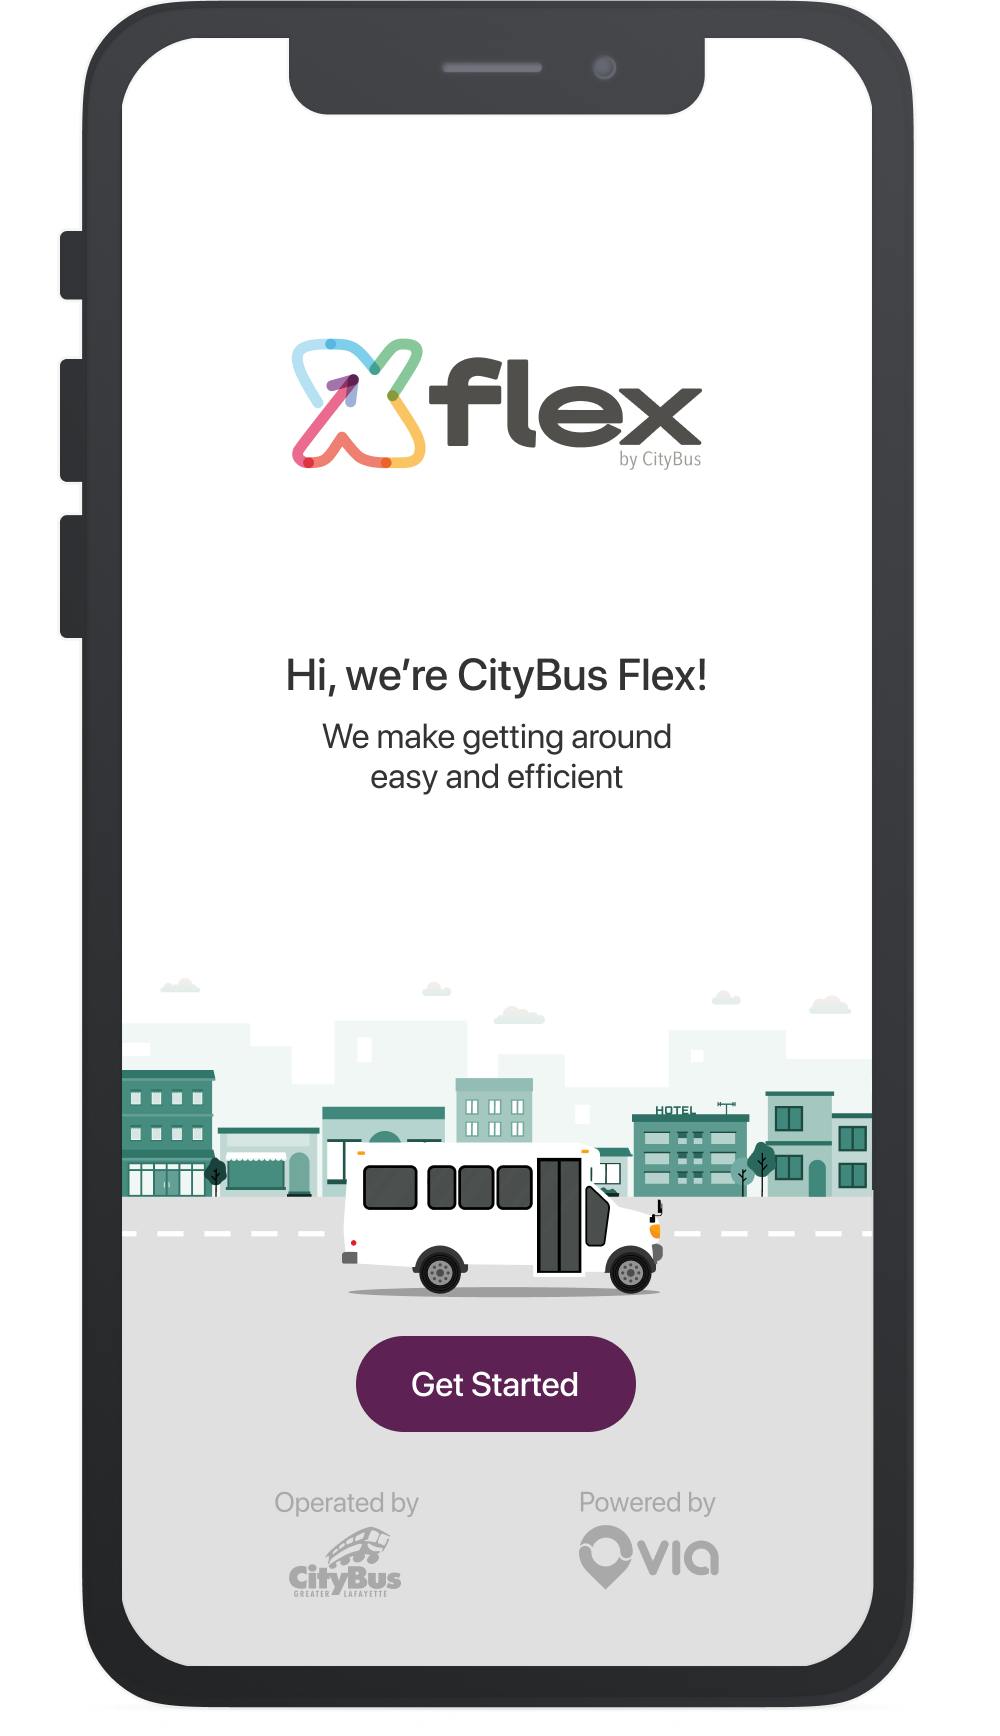 City Bus Flex